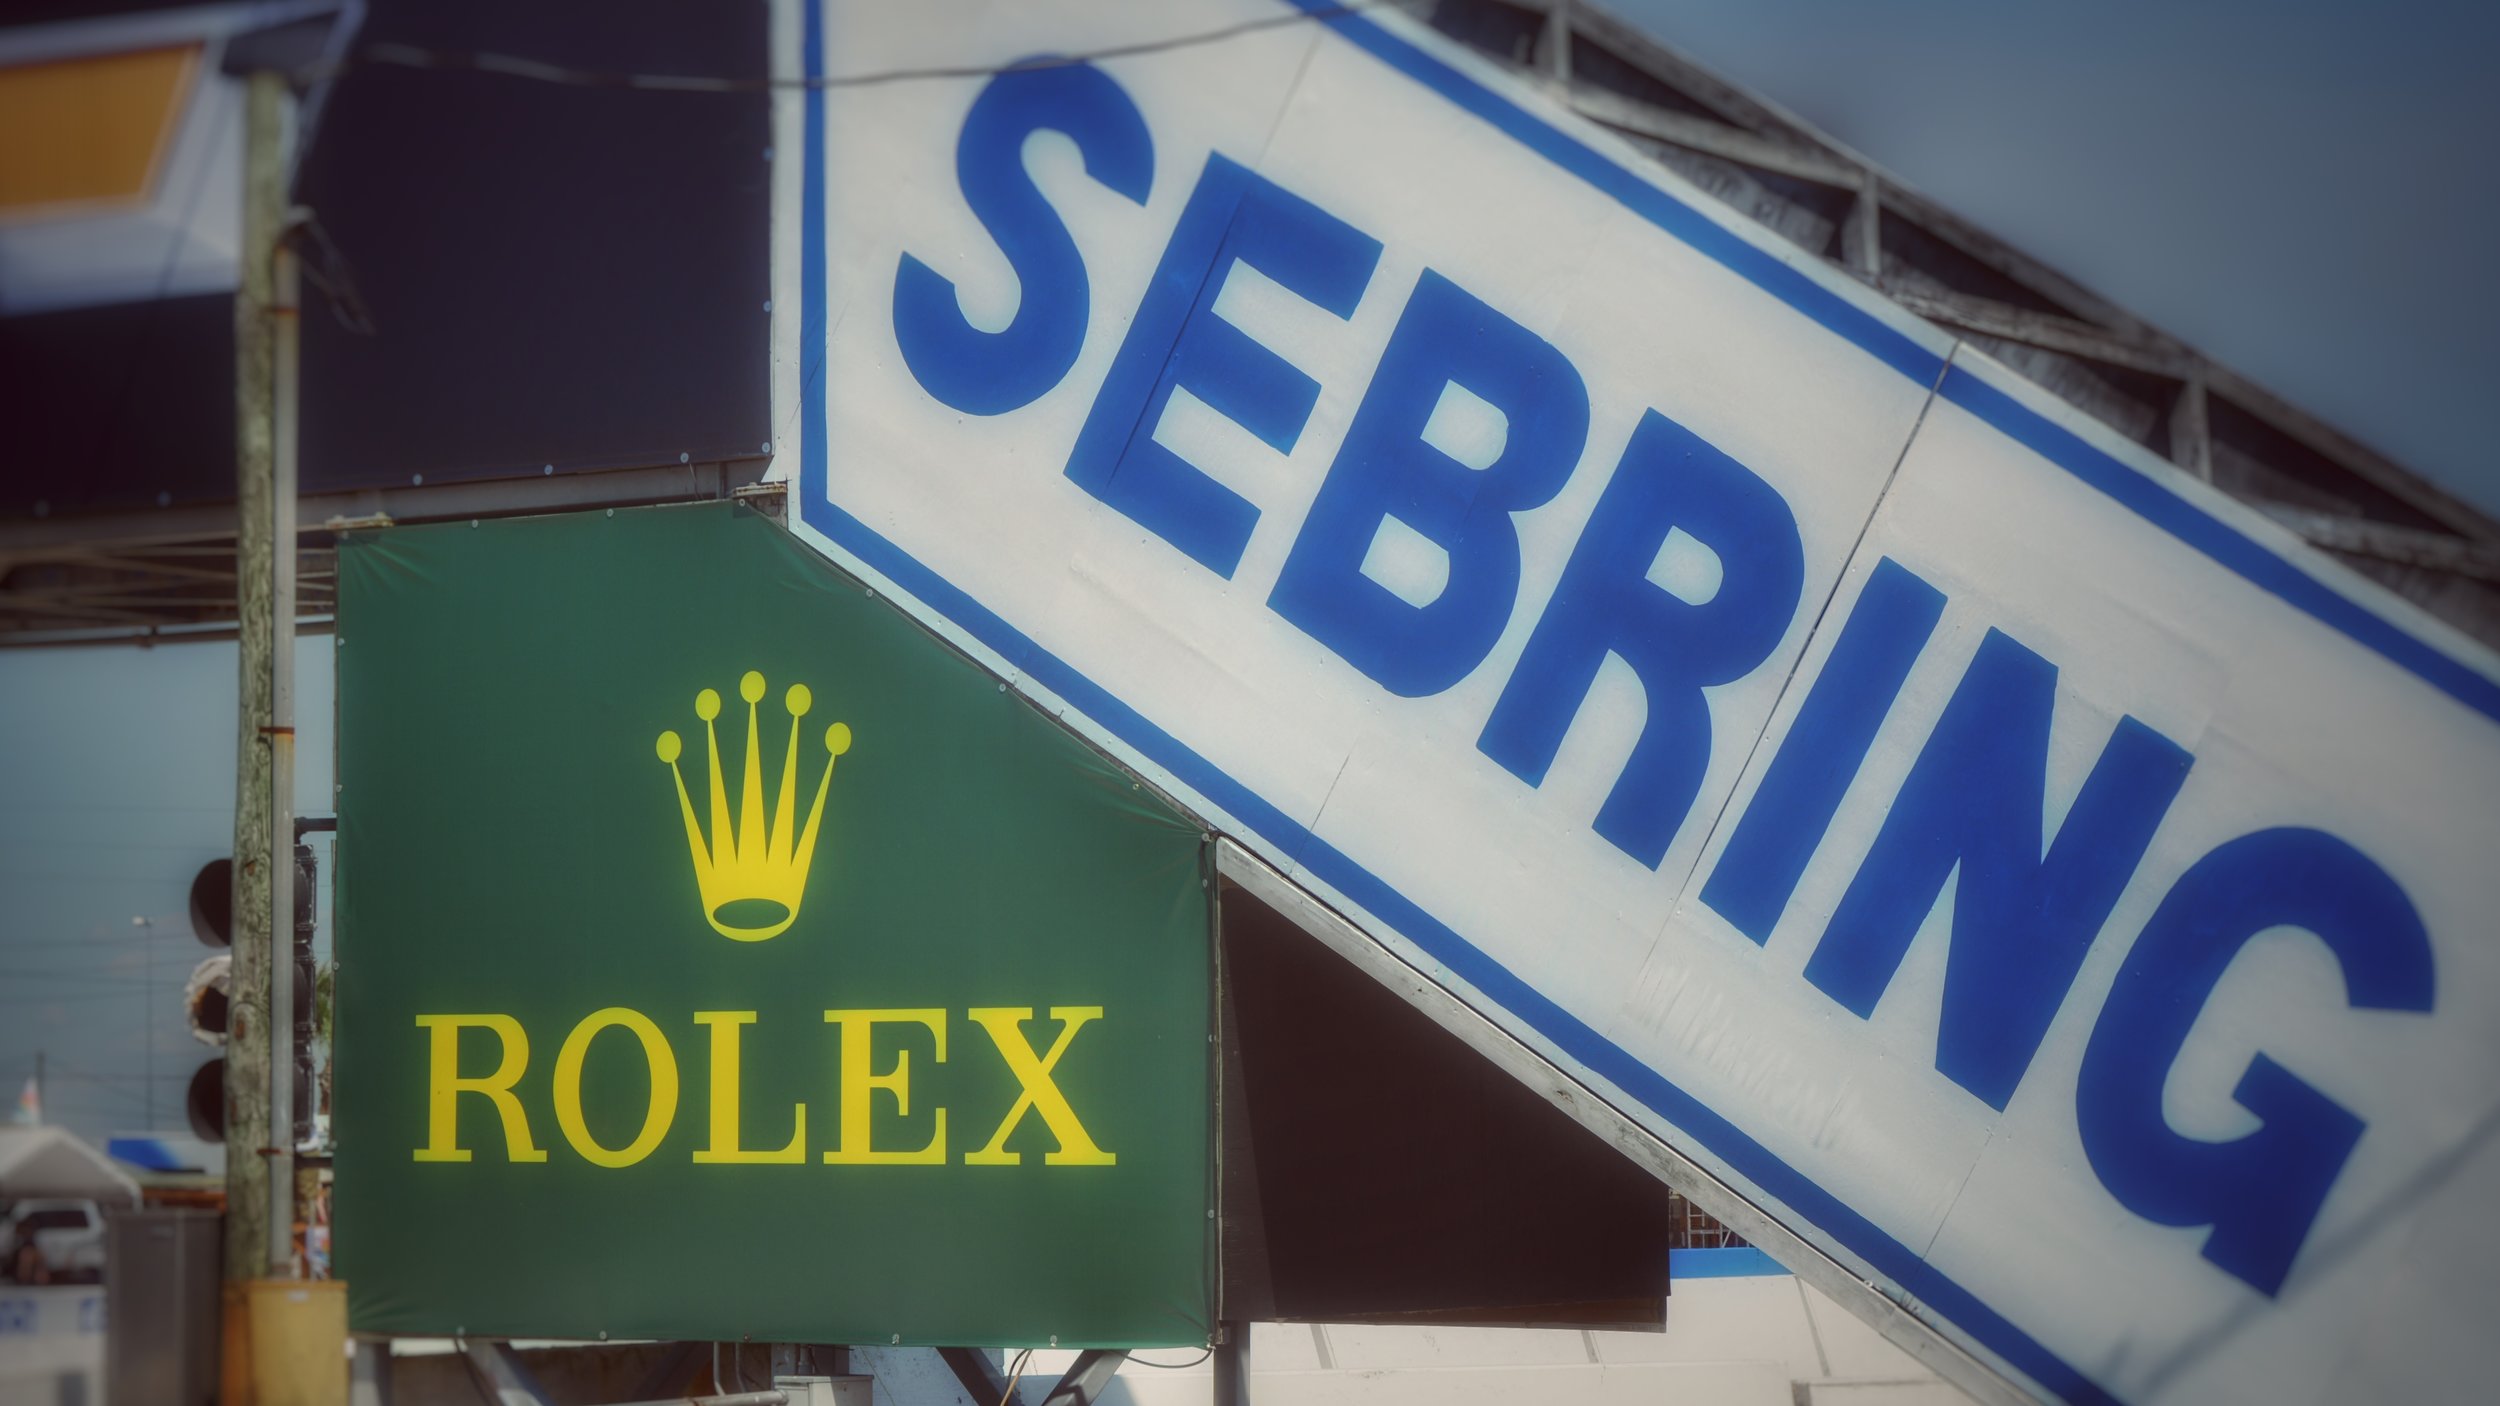 2. sebring rolex.jpg